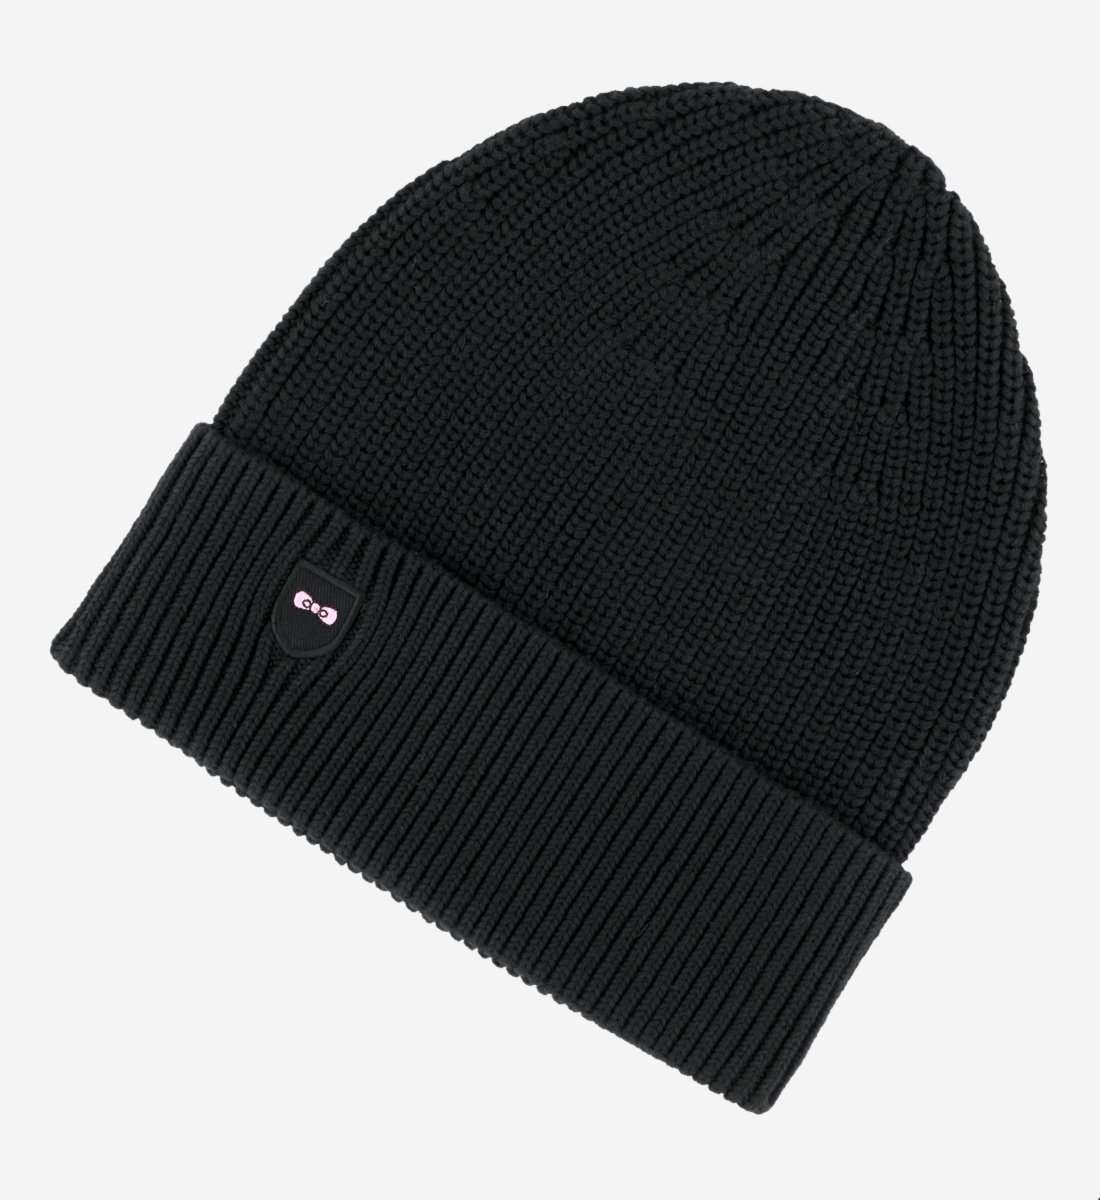 https://photo.grande-marque.fr/eden-park-bonnet-leeduni-noir,x,107000,107101.jpg